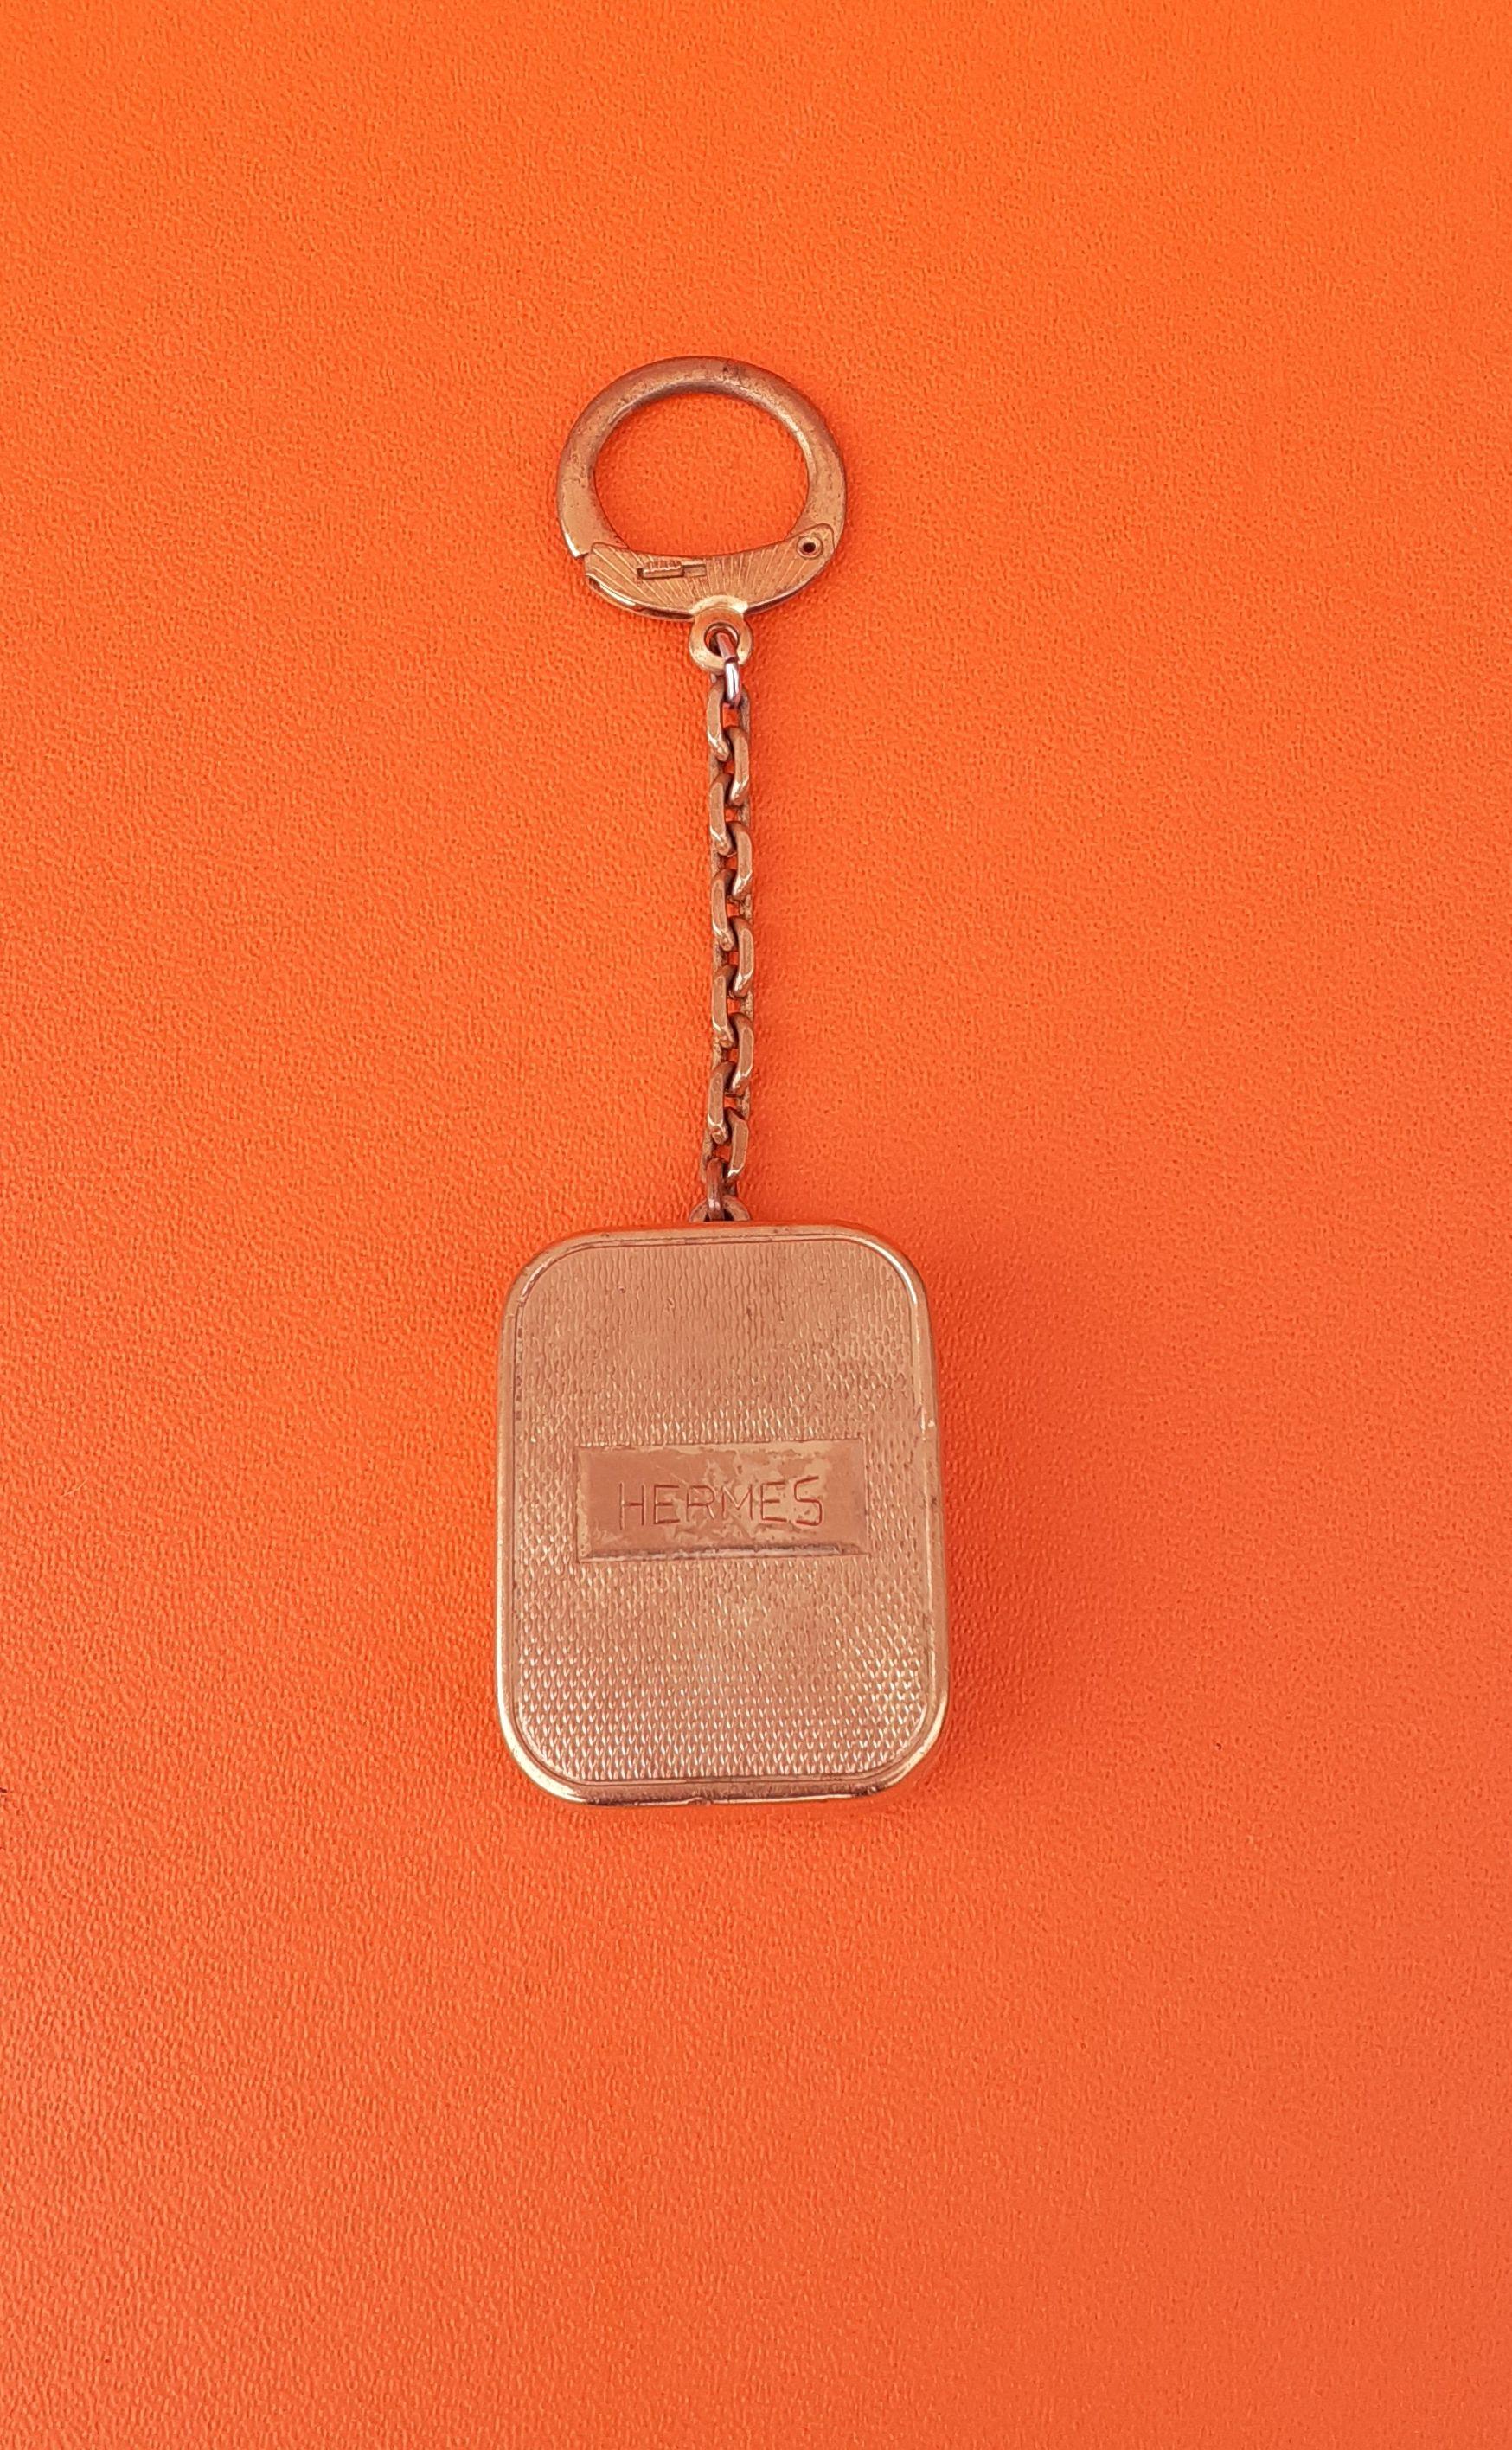 Hermès Keychain Key Ring Key Holder Reuge Sainte Croix Music Box 5